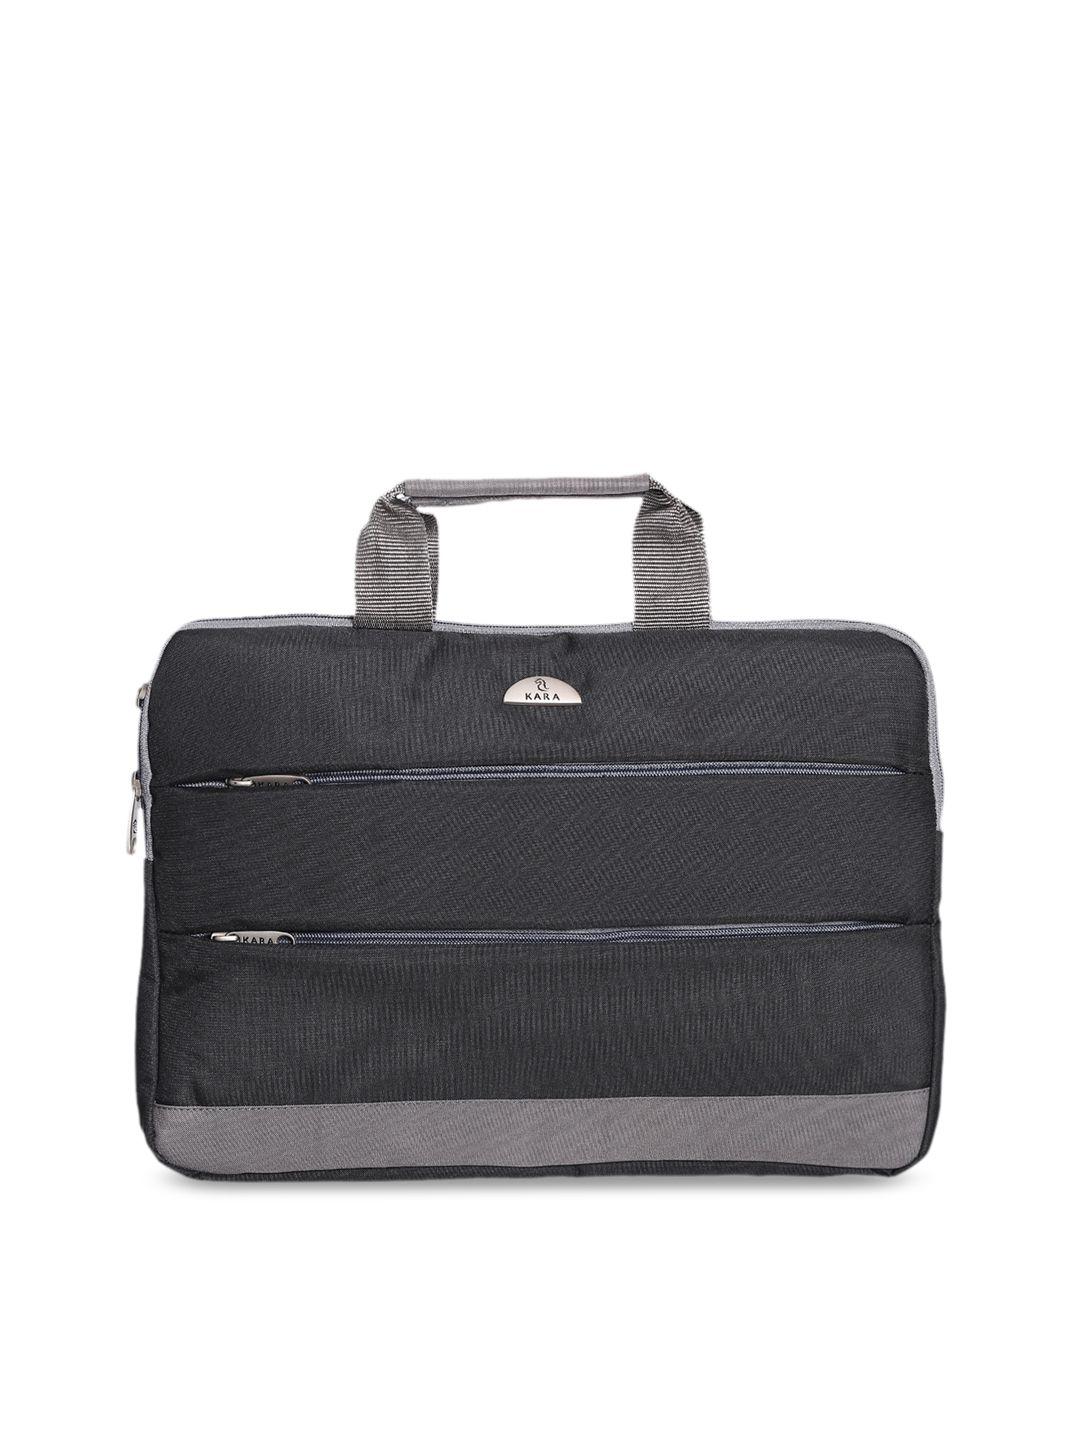 kara unisex black solid laptop bag